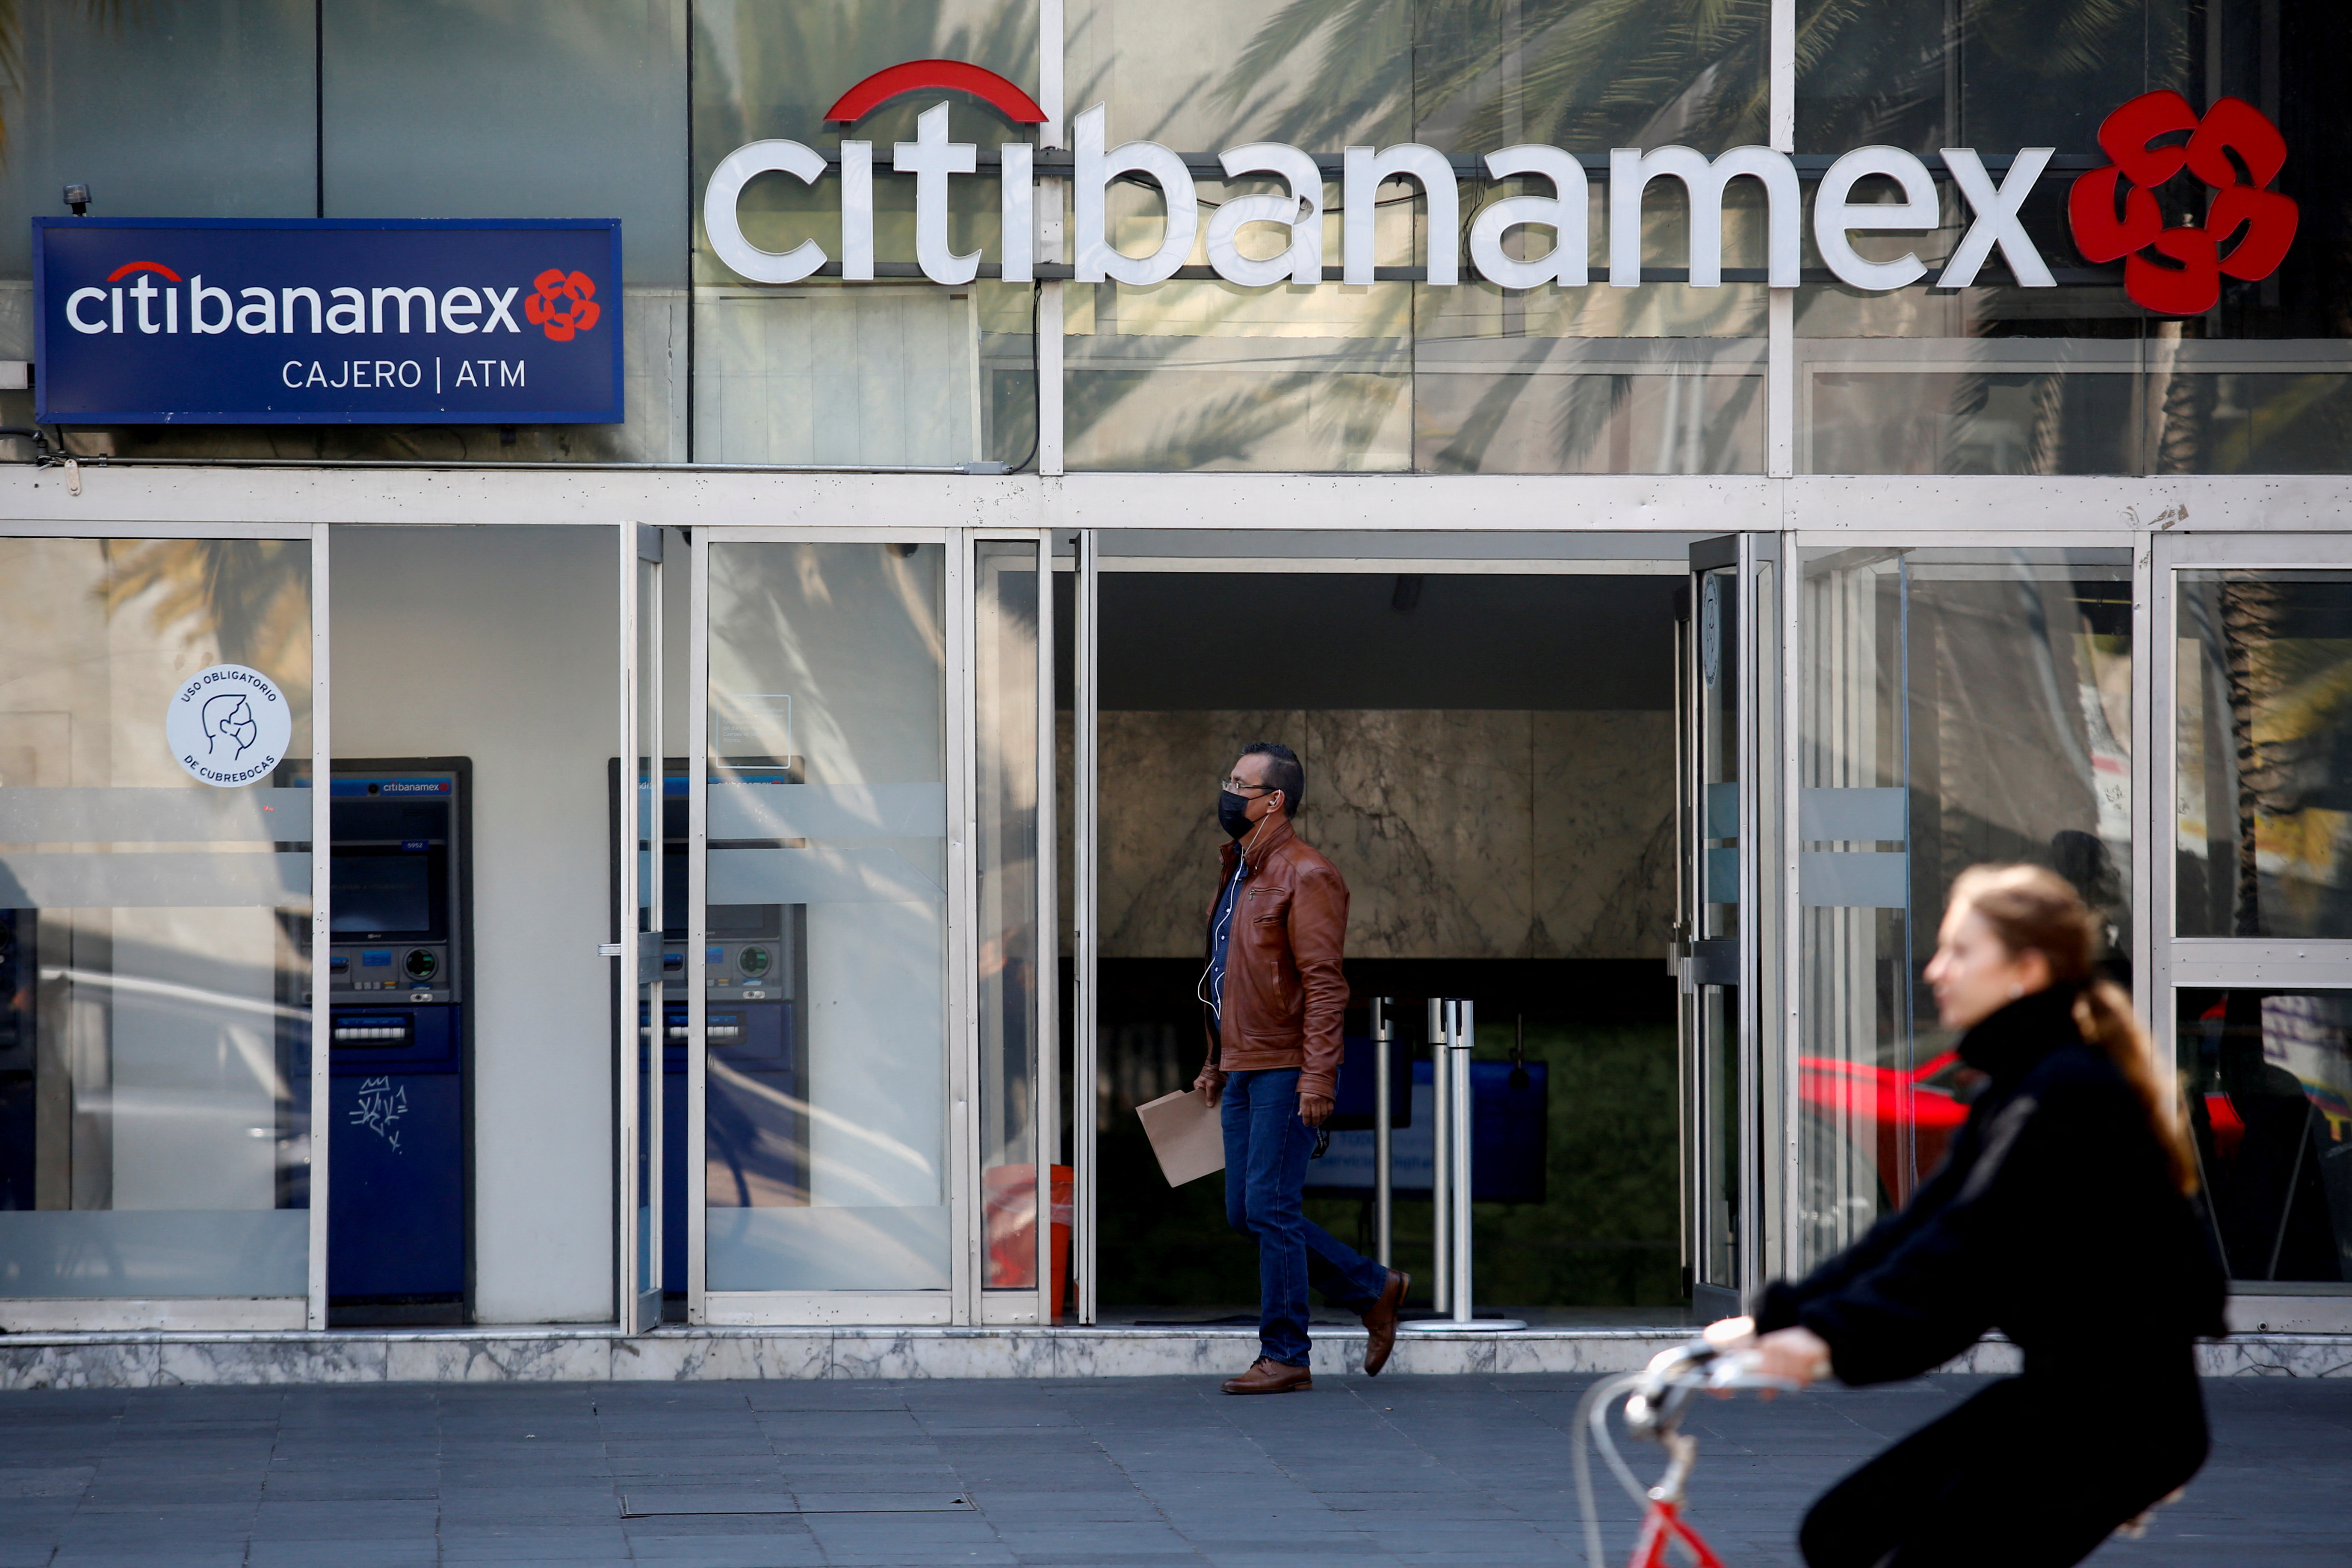 A man exits a Citibanamex bank branch in Mexico City